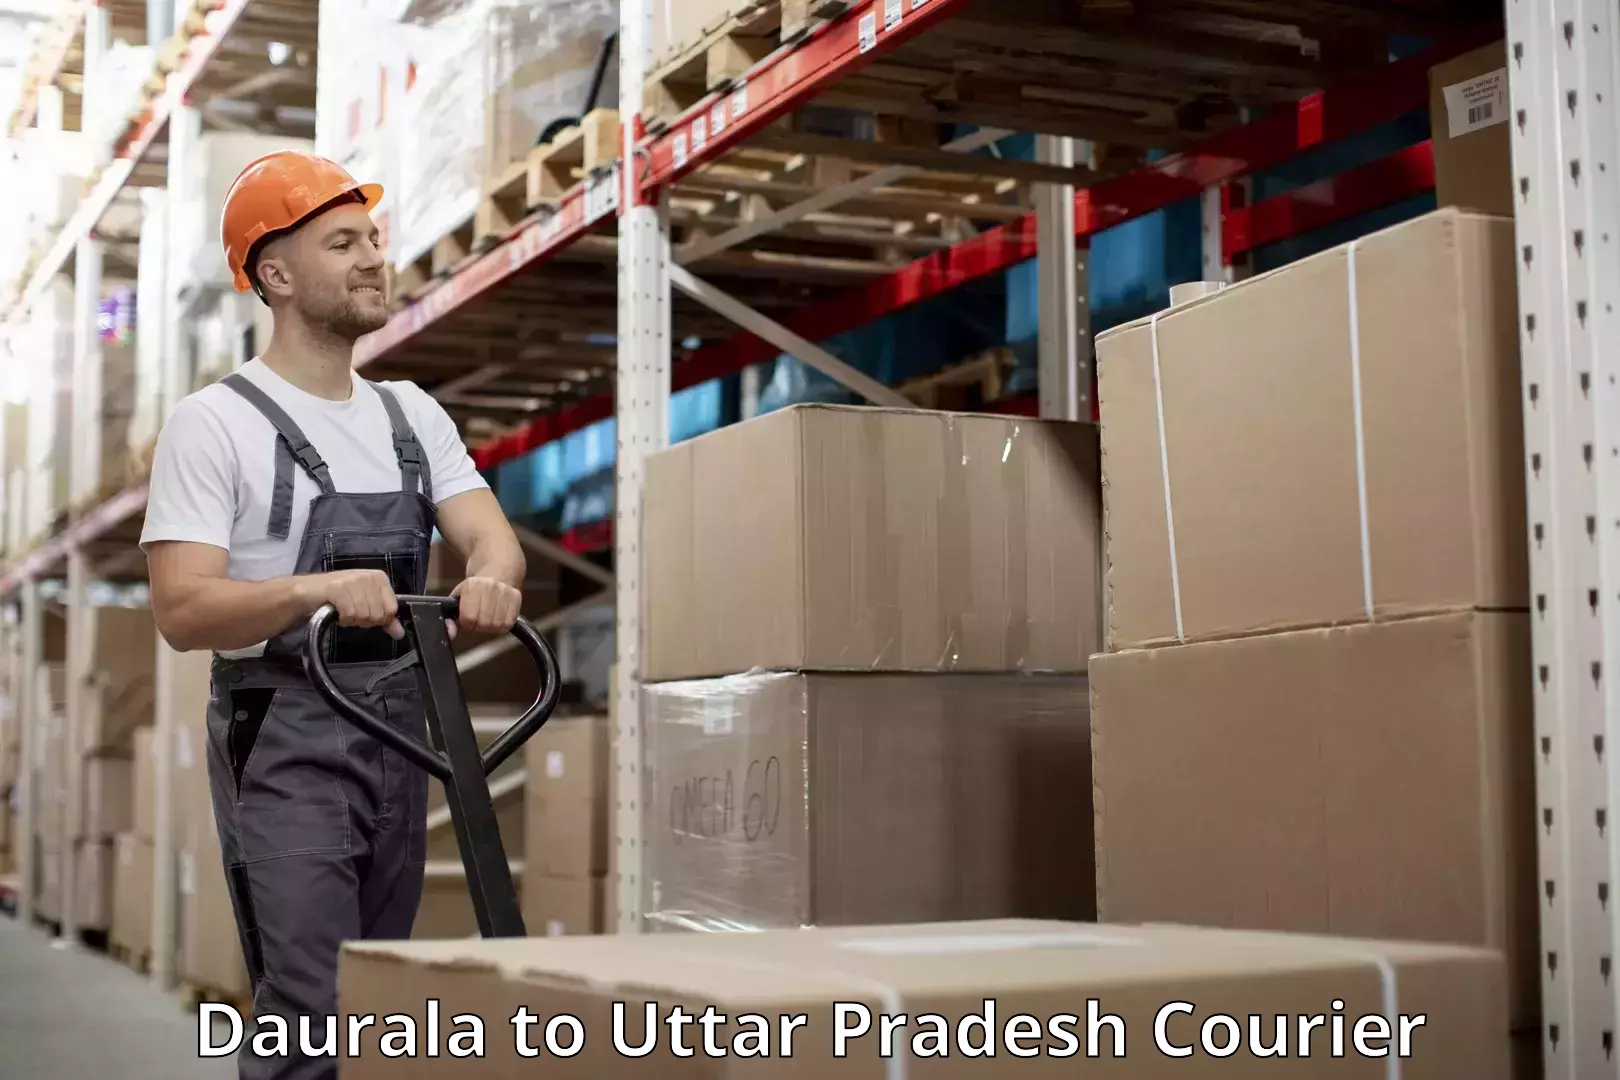 Luggage shipment specialists Daurala to Uttar Pradesh